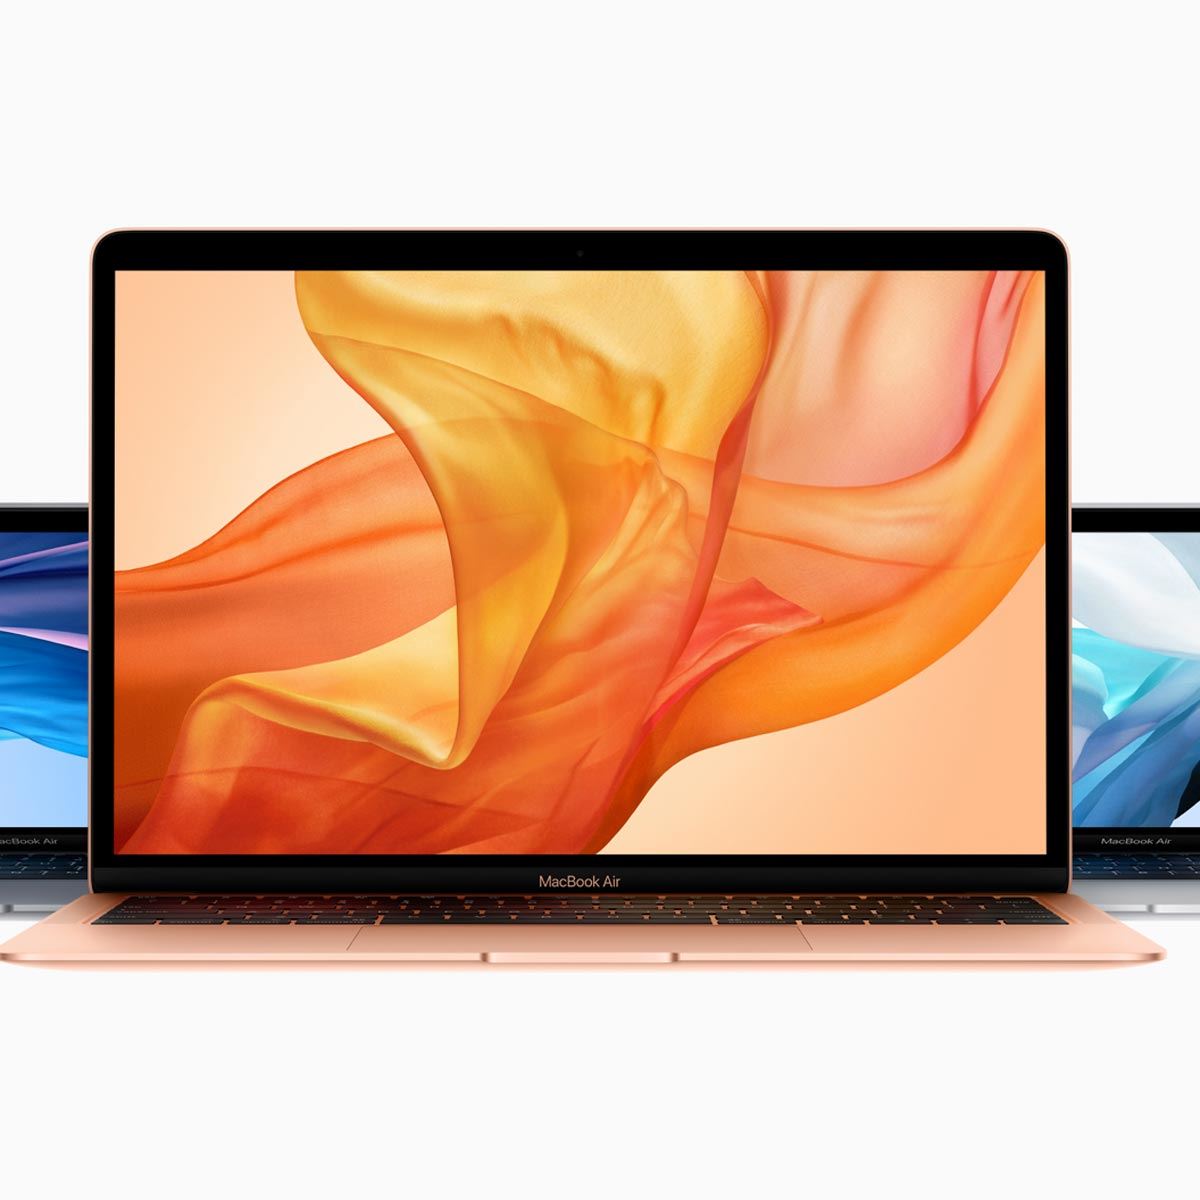 「MacBook Air」は待望のRetina化で魅力アップ！「Mac mini」は5